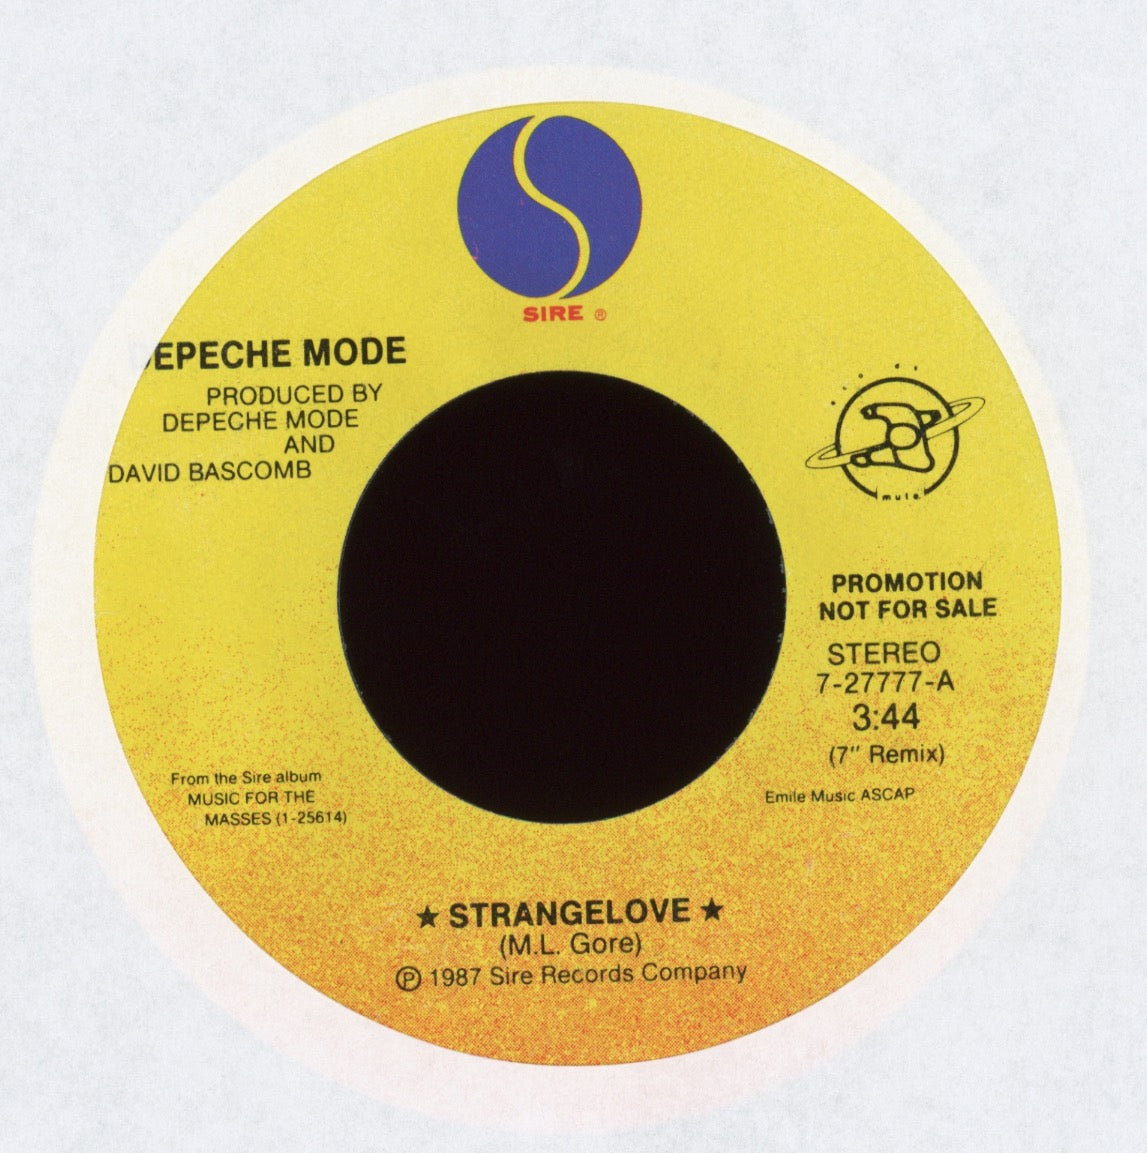 Depeche Mode - Strangelove on Sire Promo